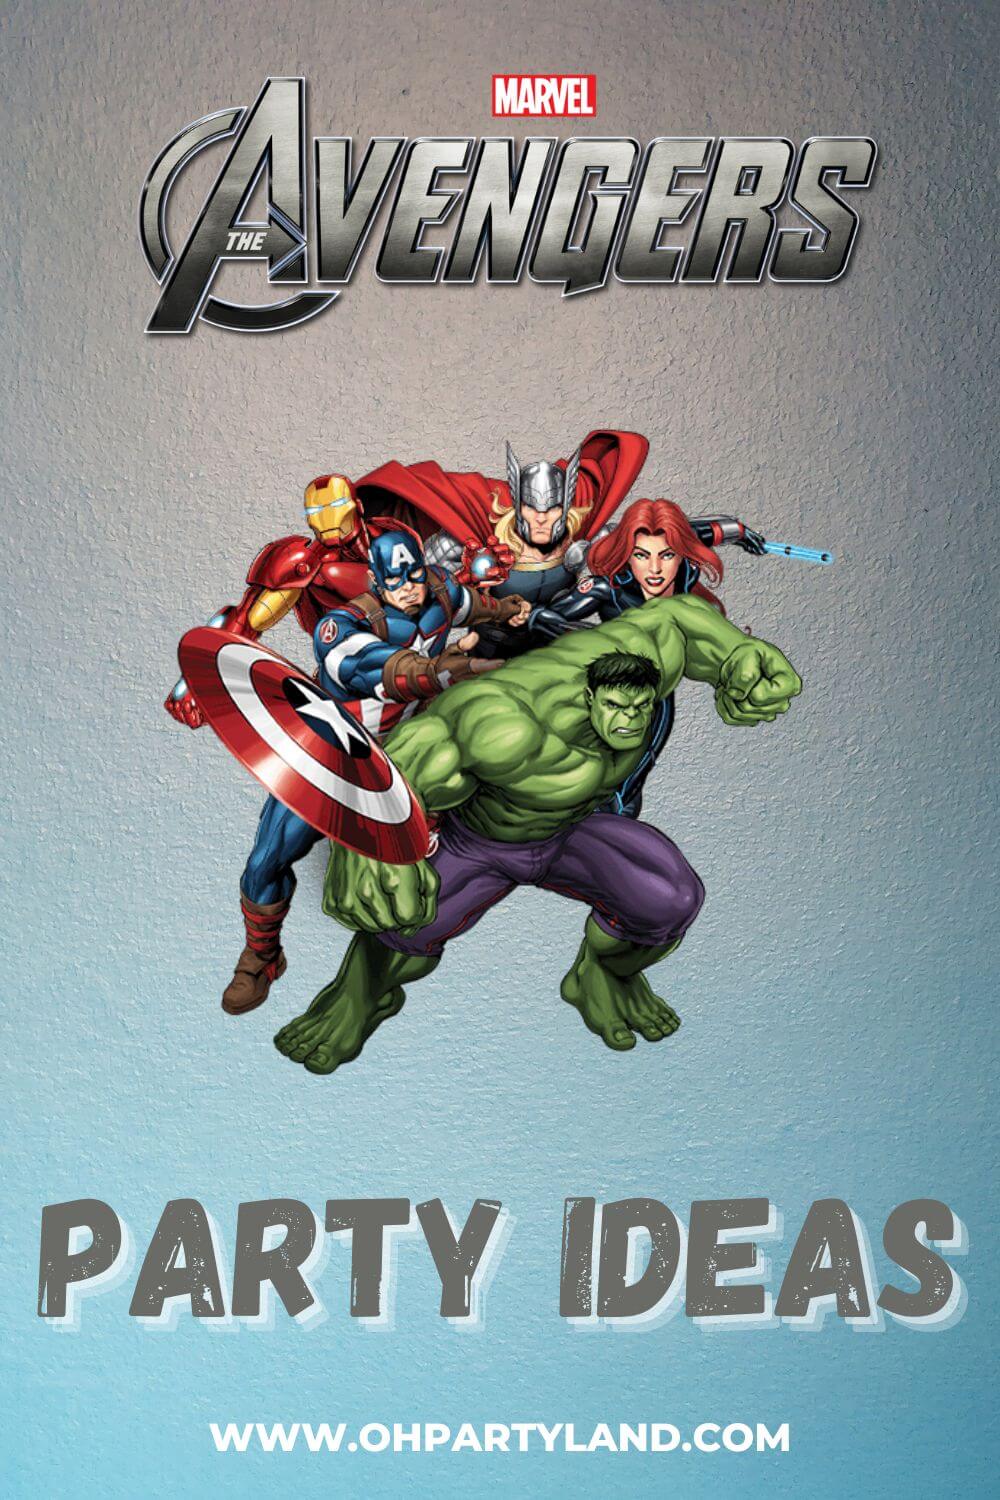 avengers party ideas